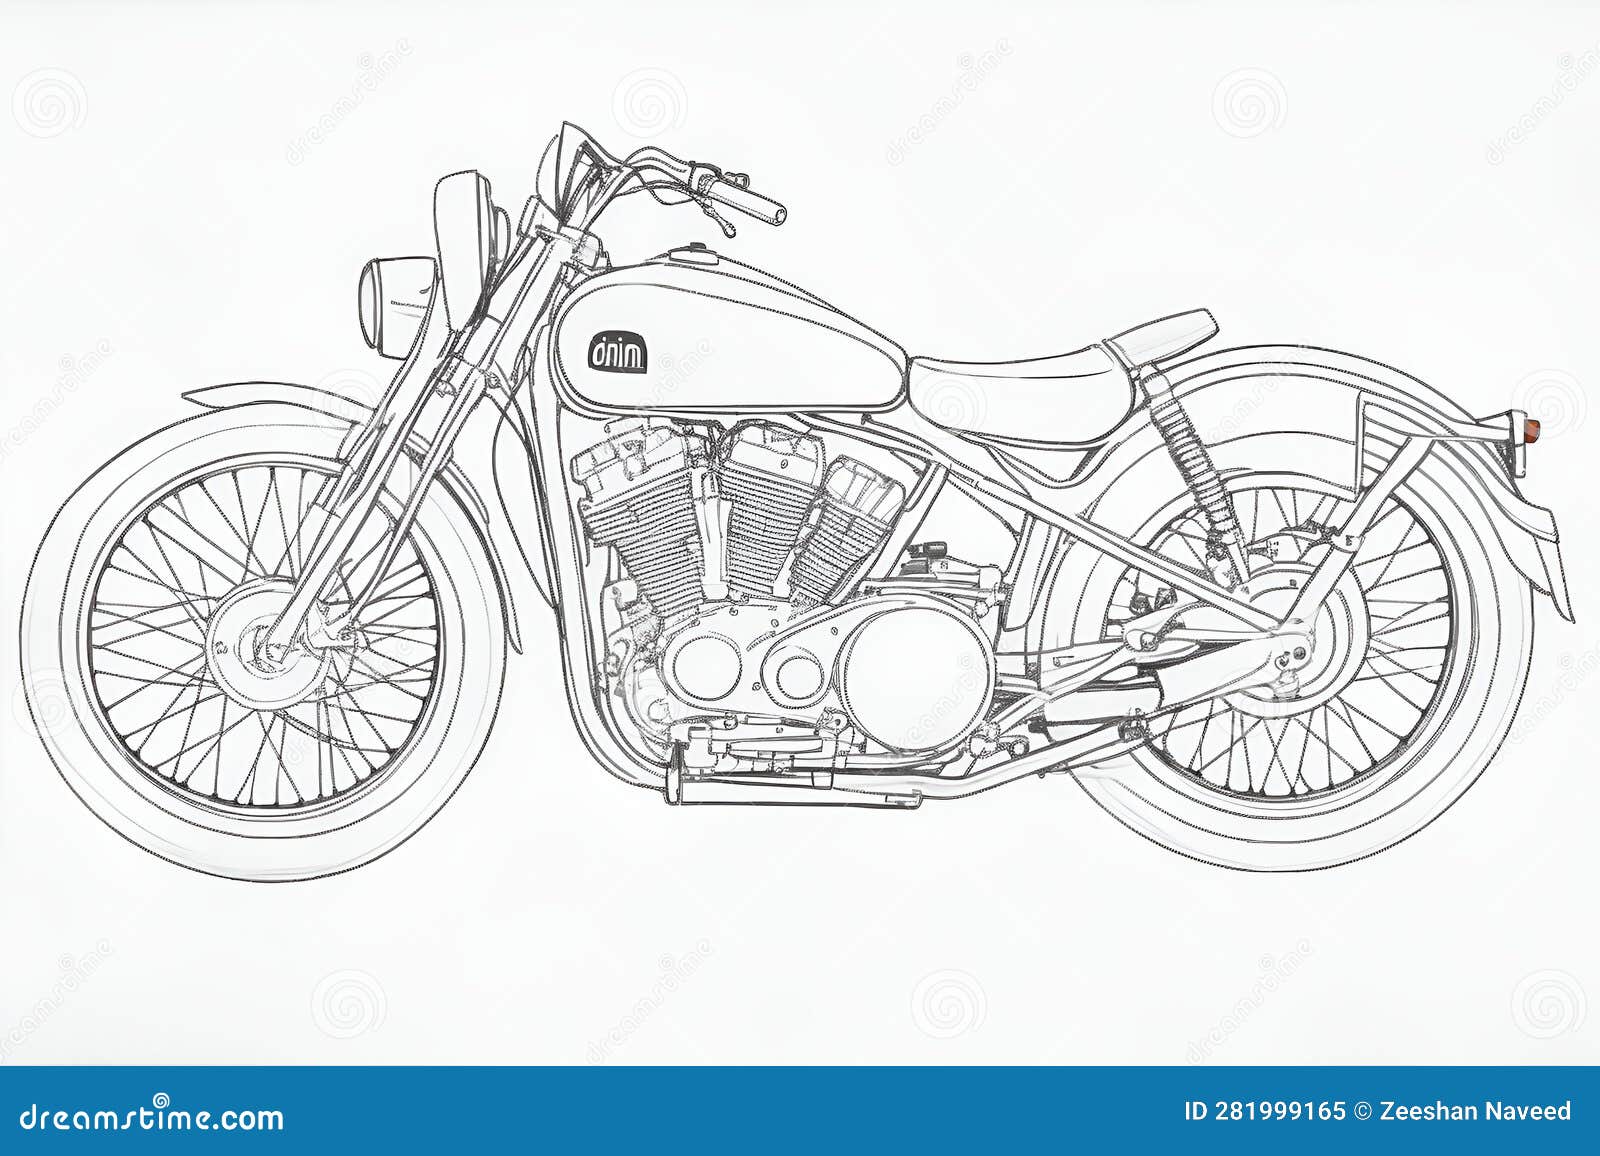 mortorcyles are so cool | Bike drawing, Bike sketch, Motorcycle drawing